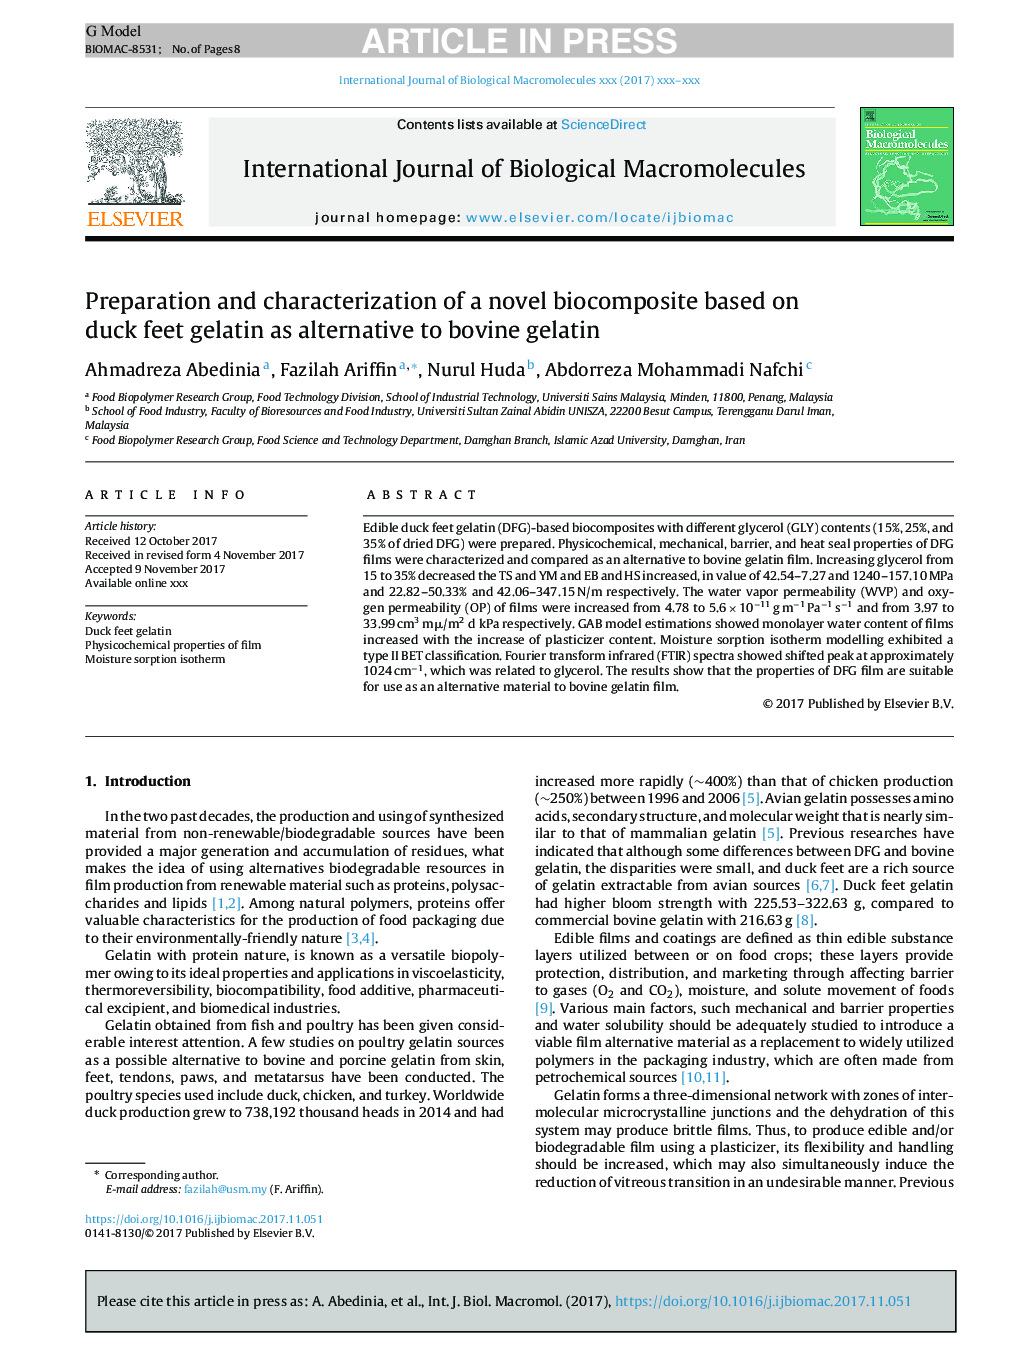 Preparation and characterization of a novel biocomposite based on duck feet gelatin as alternative to bovine gelatin